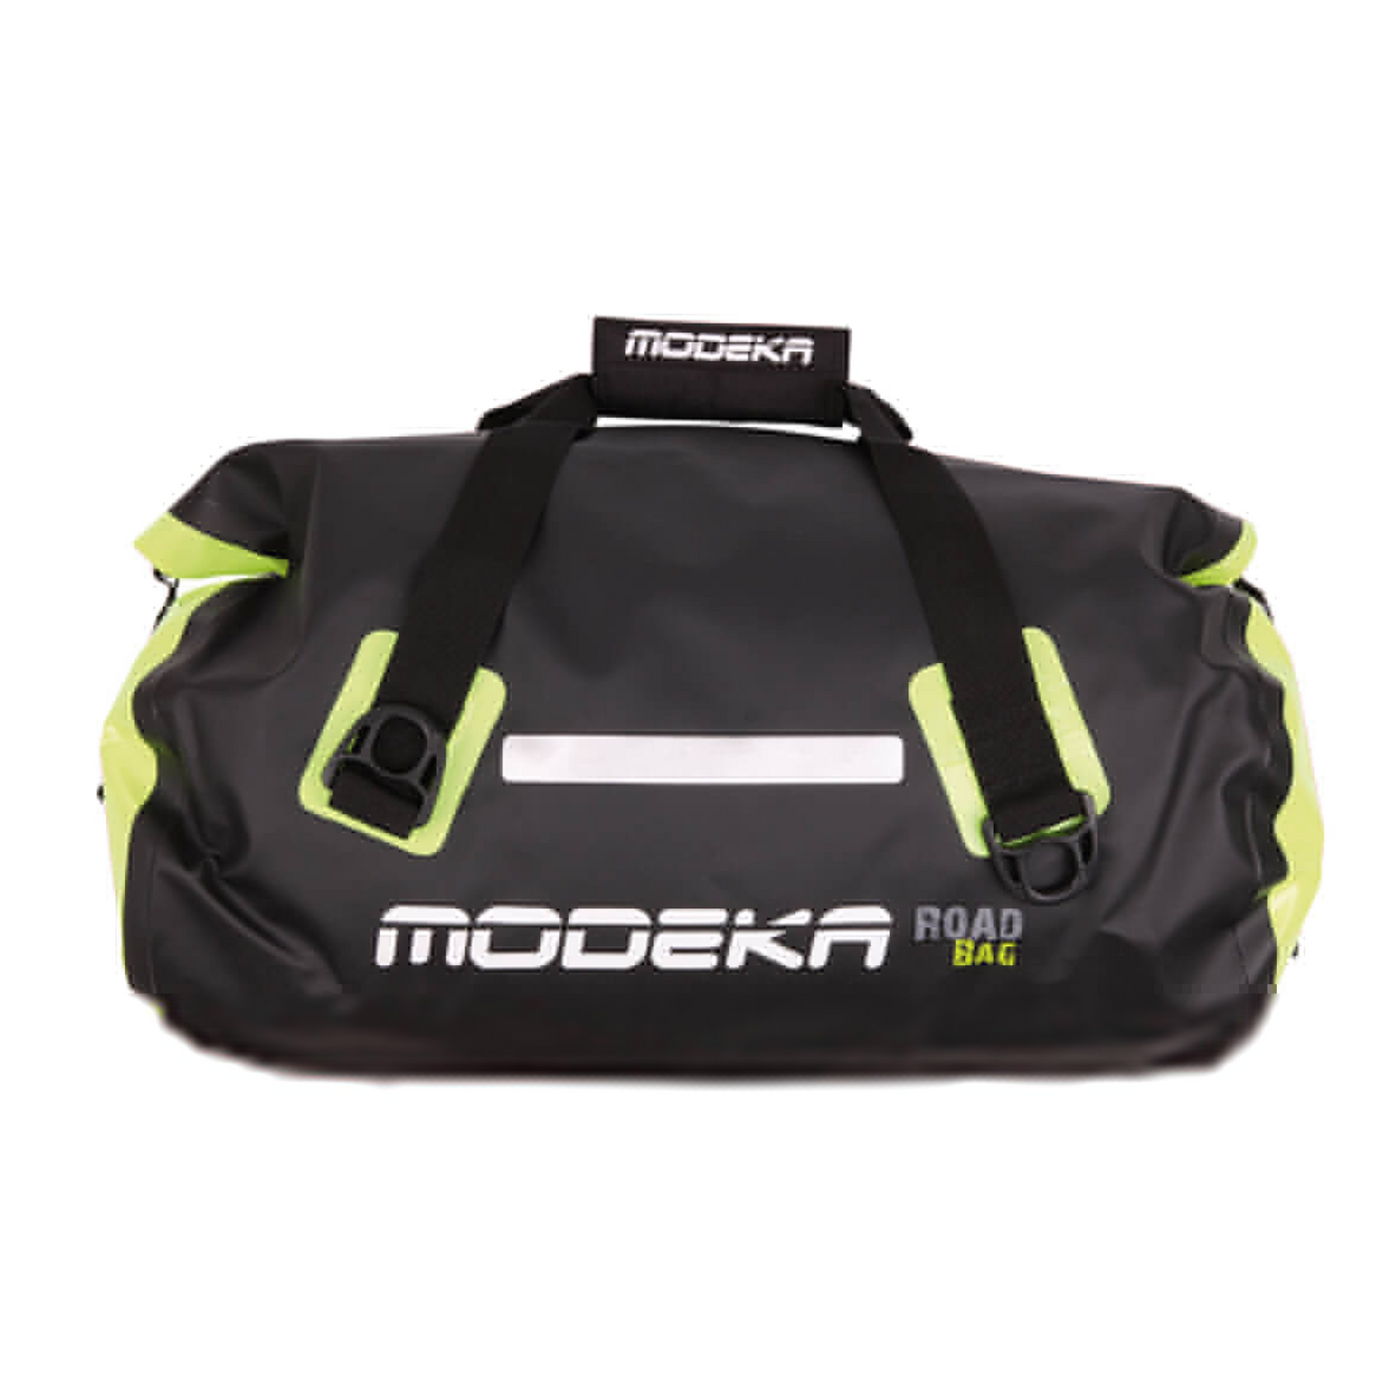 MODEKA Road Bag 60L